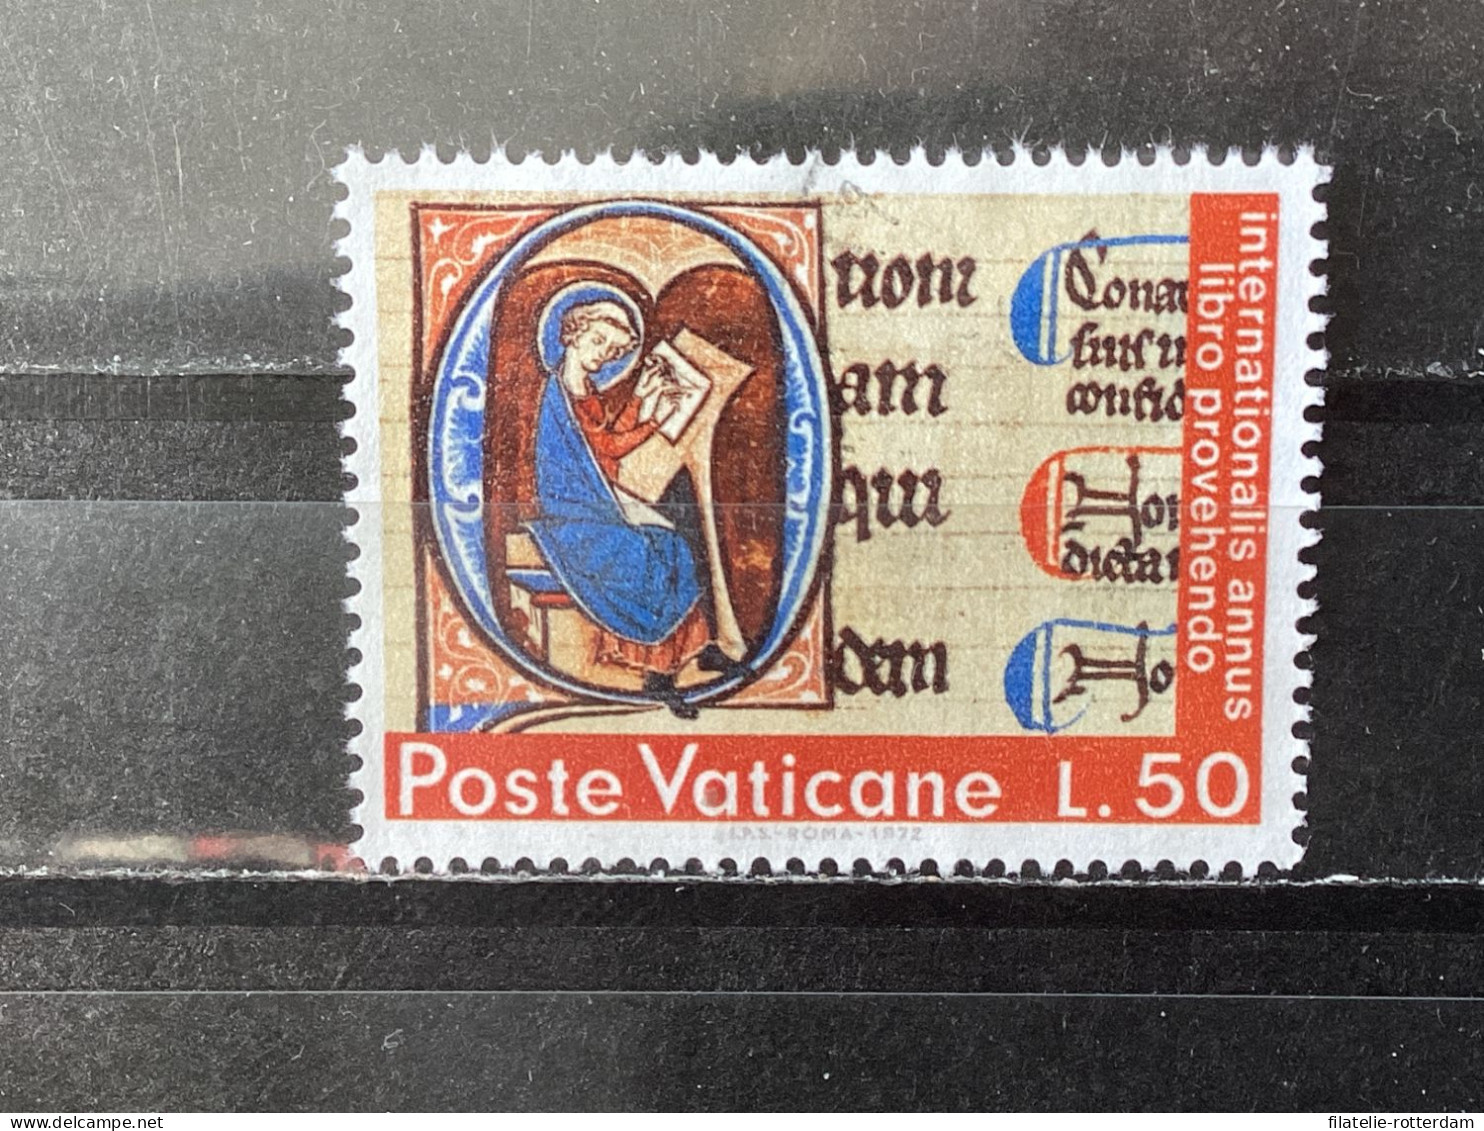 Vatican City / Vaticaanstad - International Year Of Books (50) 1972 - Oblitérés